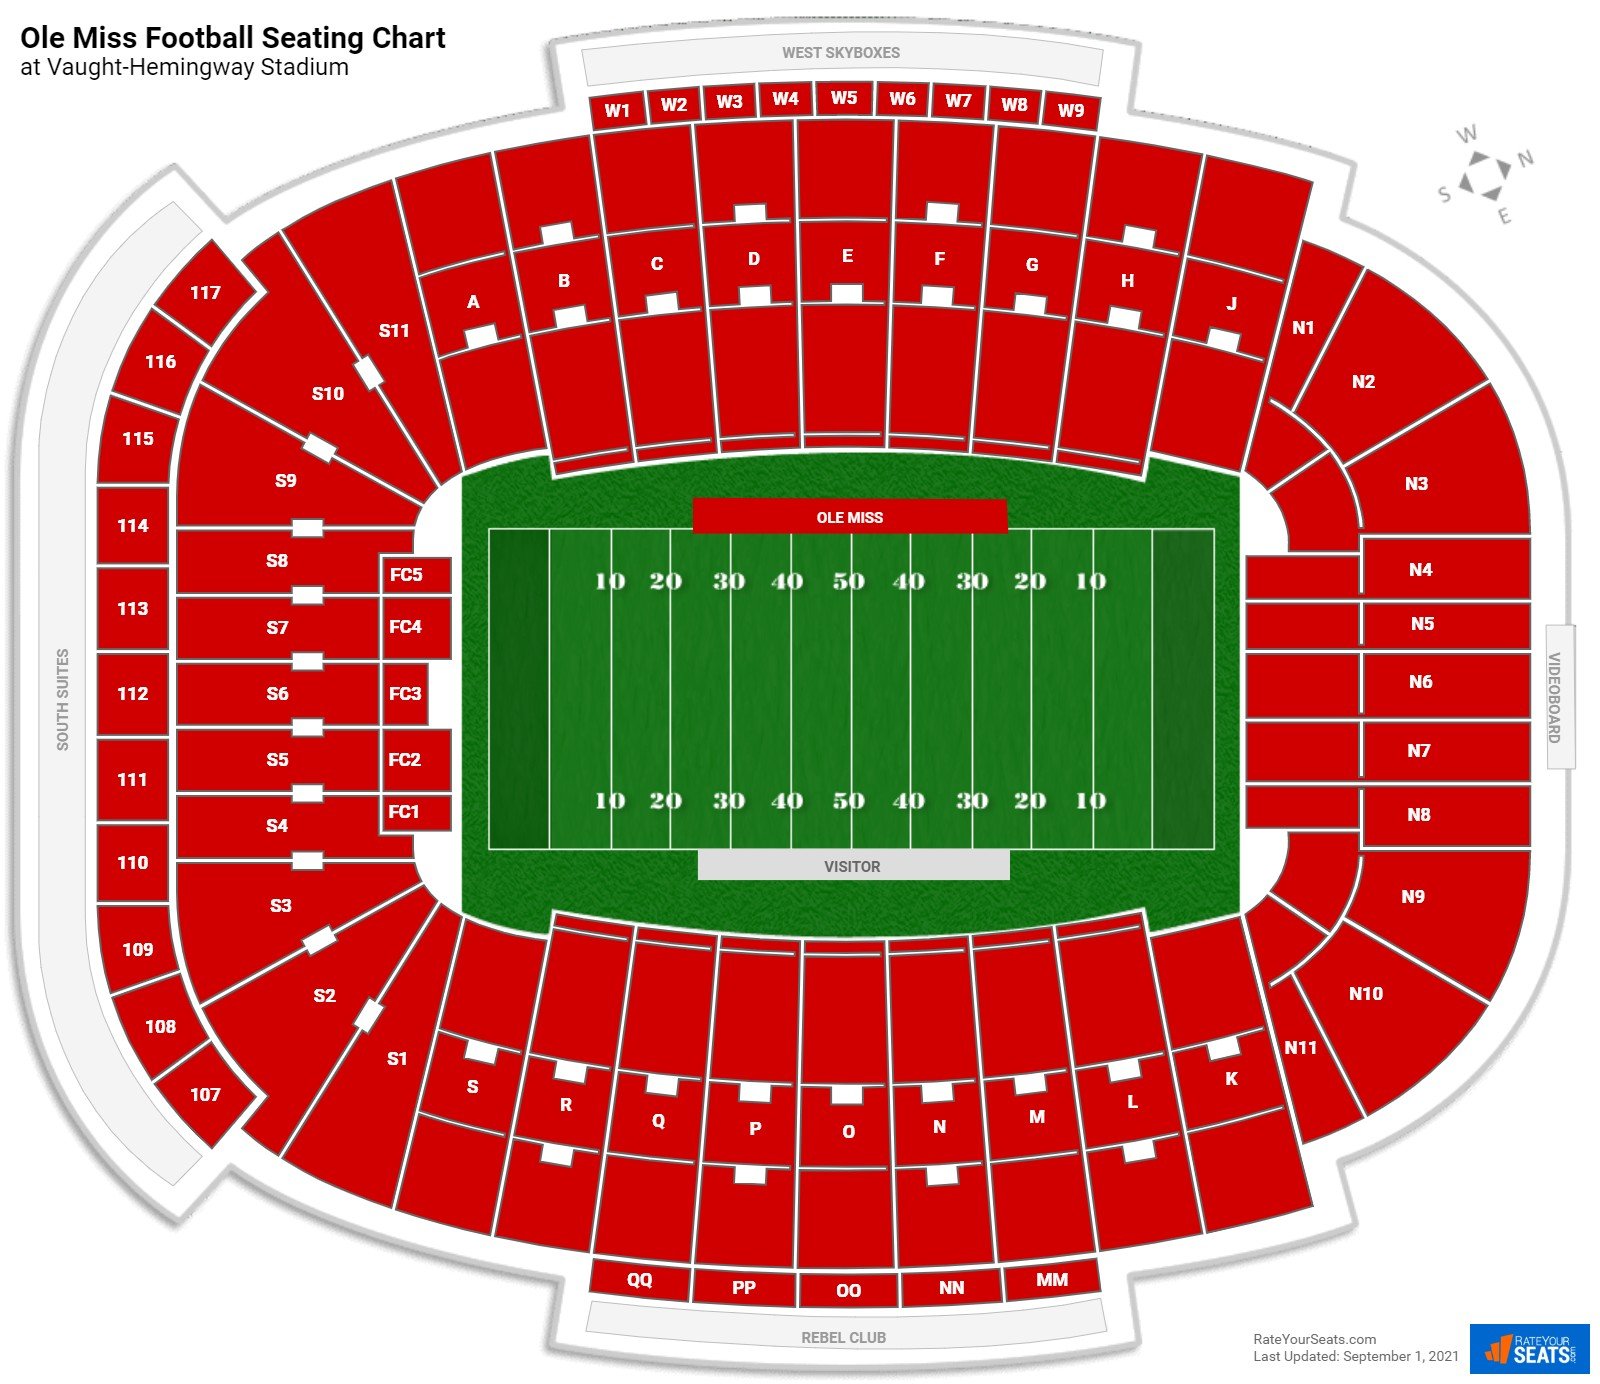 Vaught-Hemingway Stadium Seating Chart - RateYourSeats.com